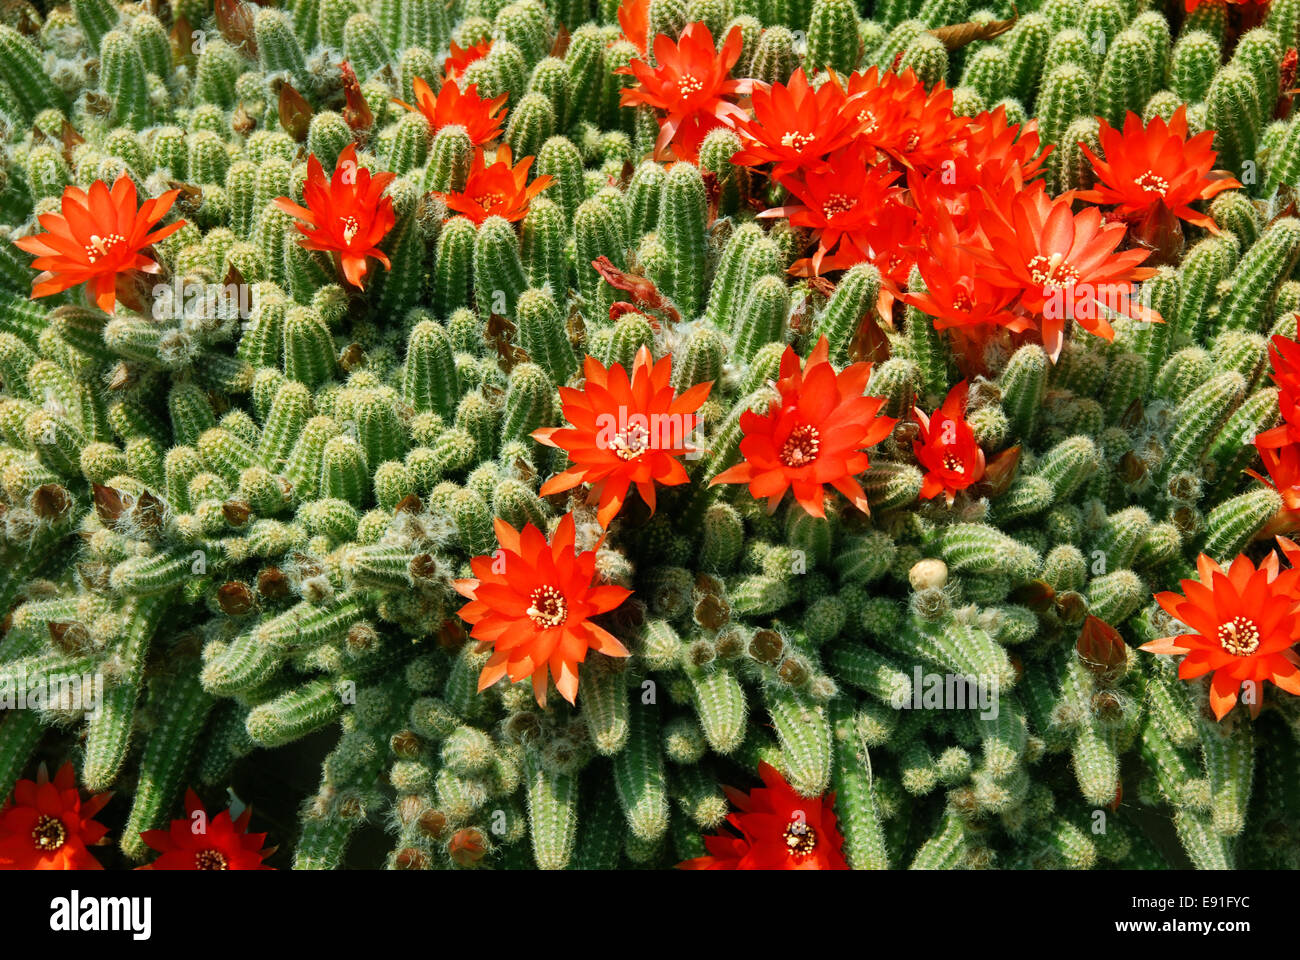 Cactus red flowers Stock Photo